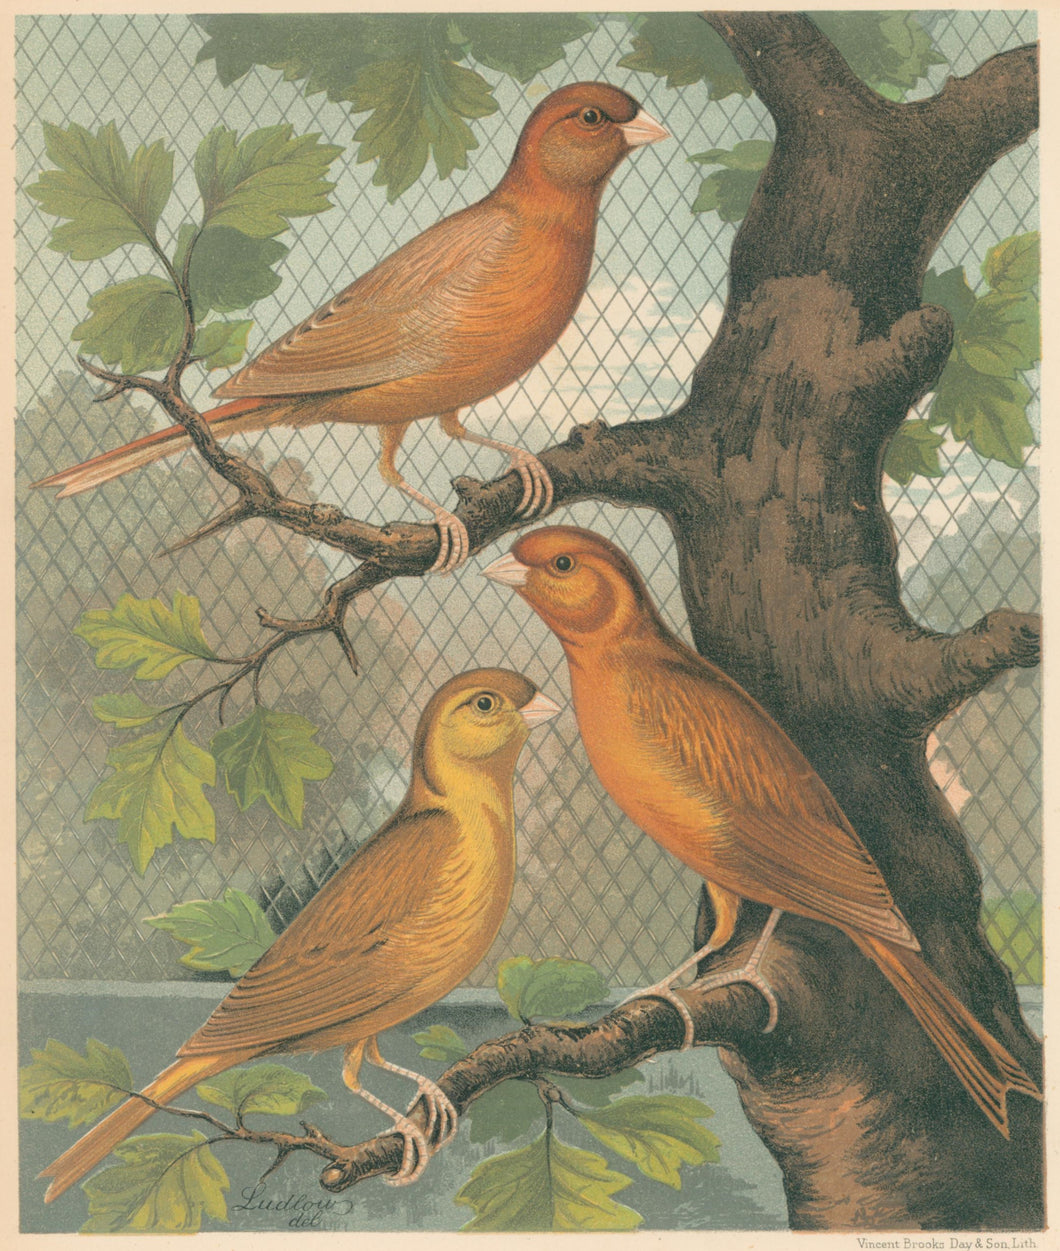 Ludlow “Cinnamon Canaries. Norwich Type